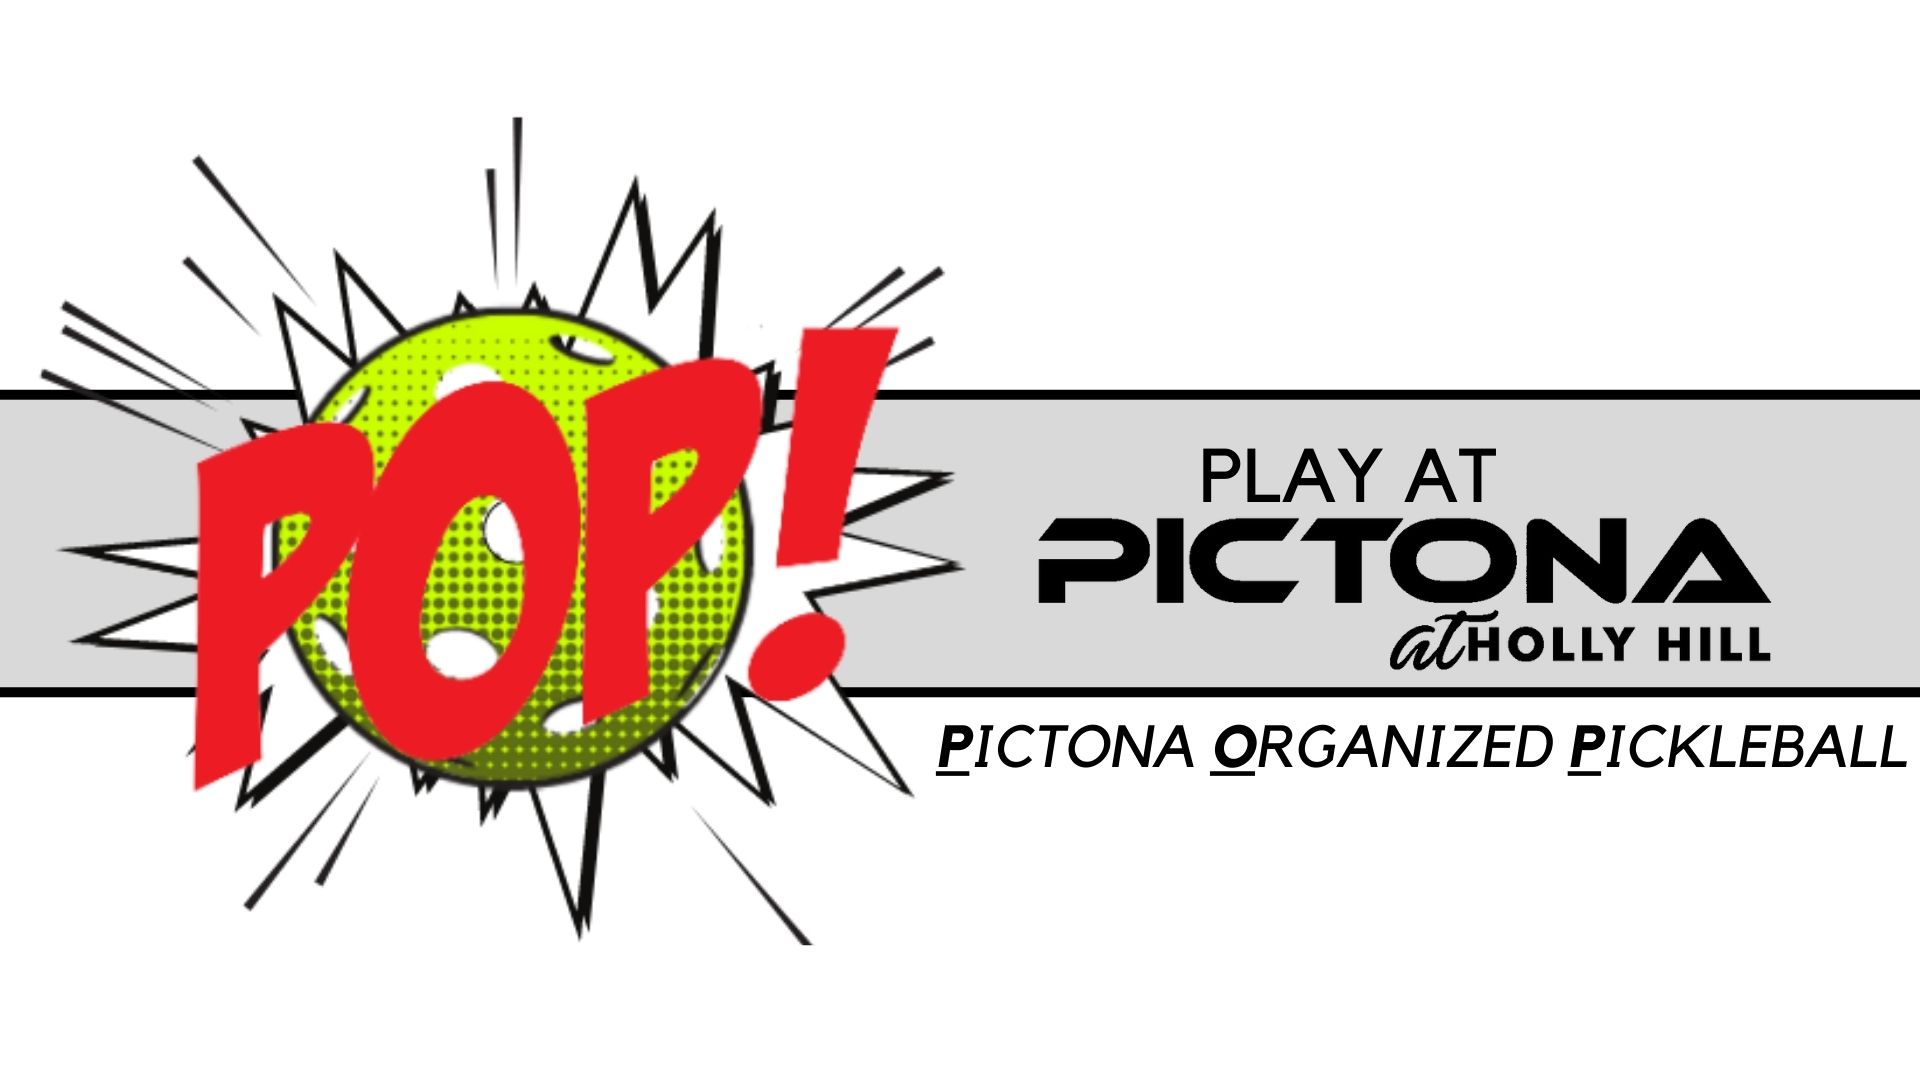 Pop! - Pictona Organized Pickleball